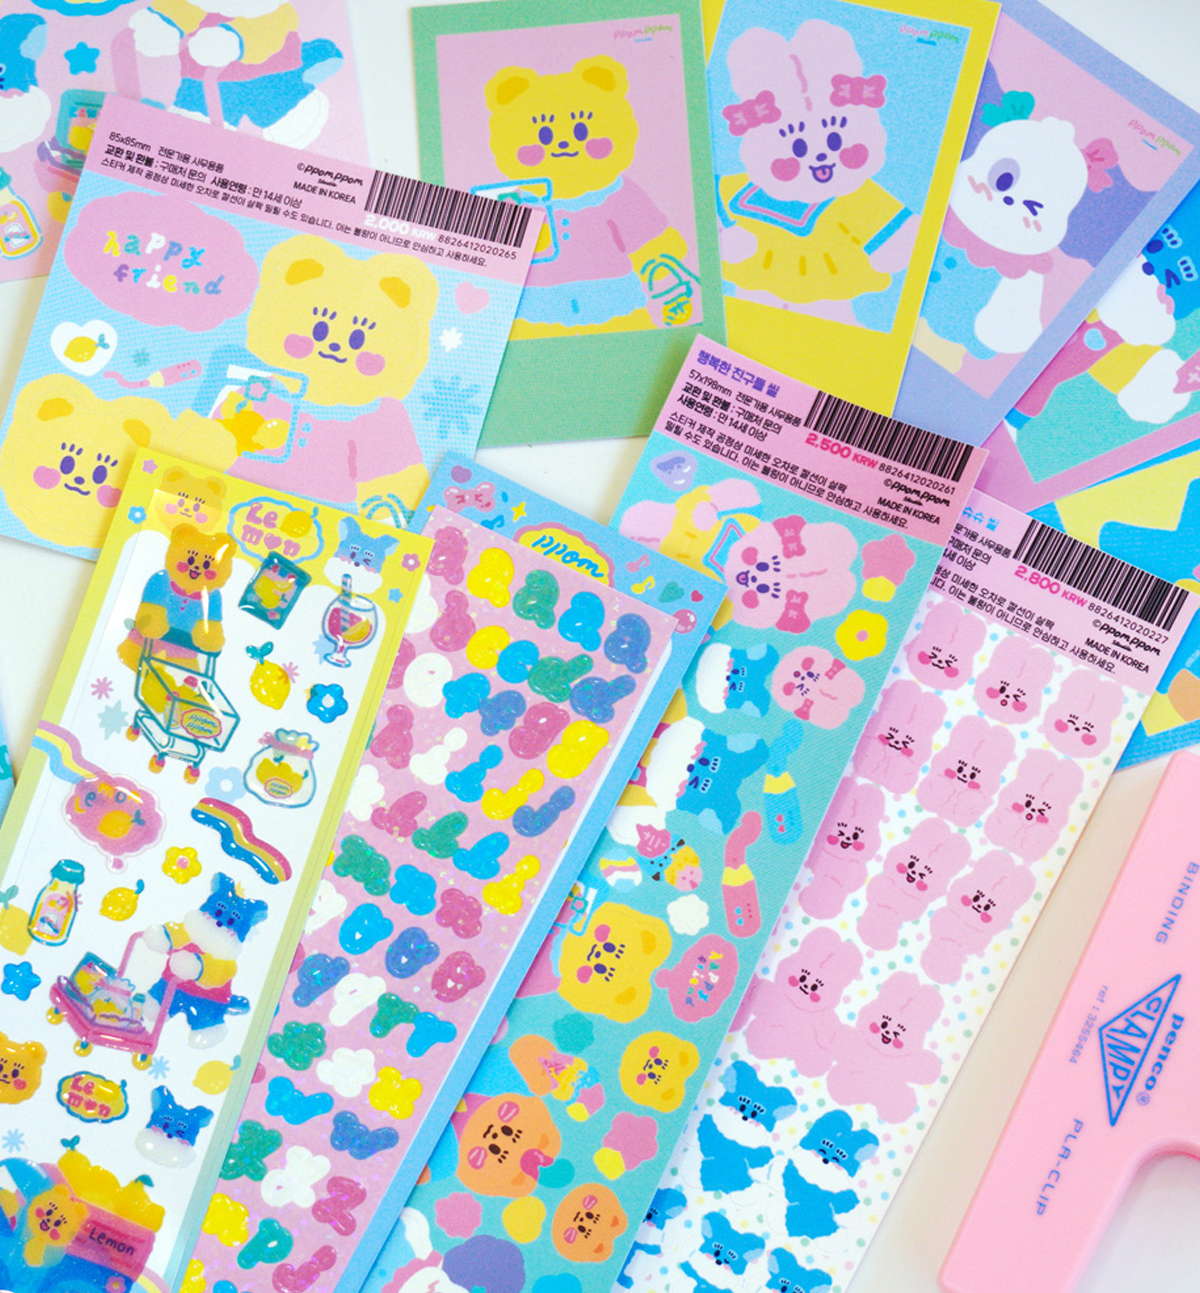 Color Pop Paper File & Sticker Pack [11 Items]